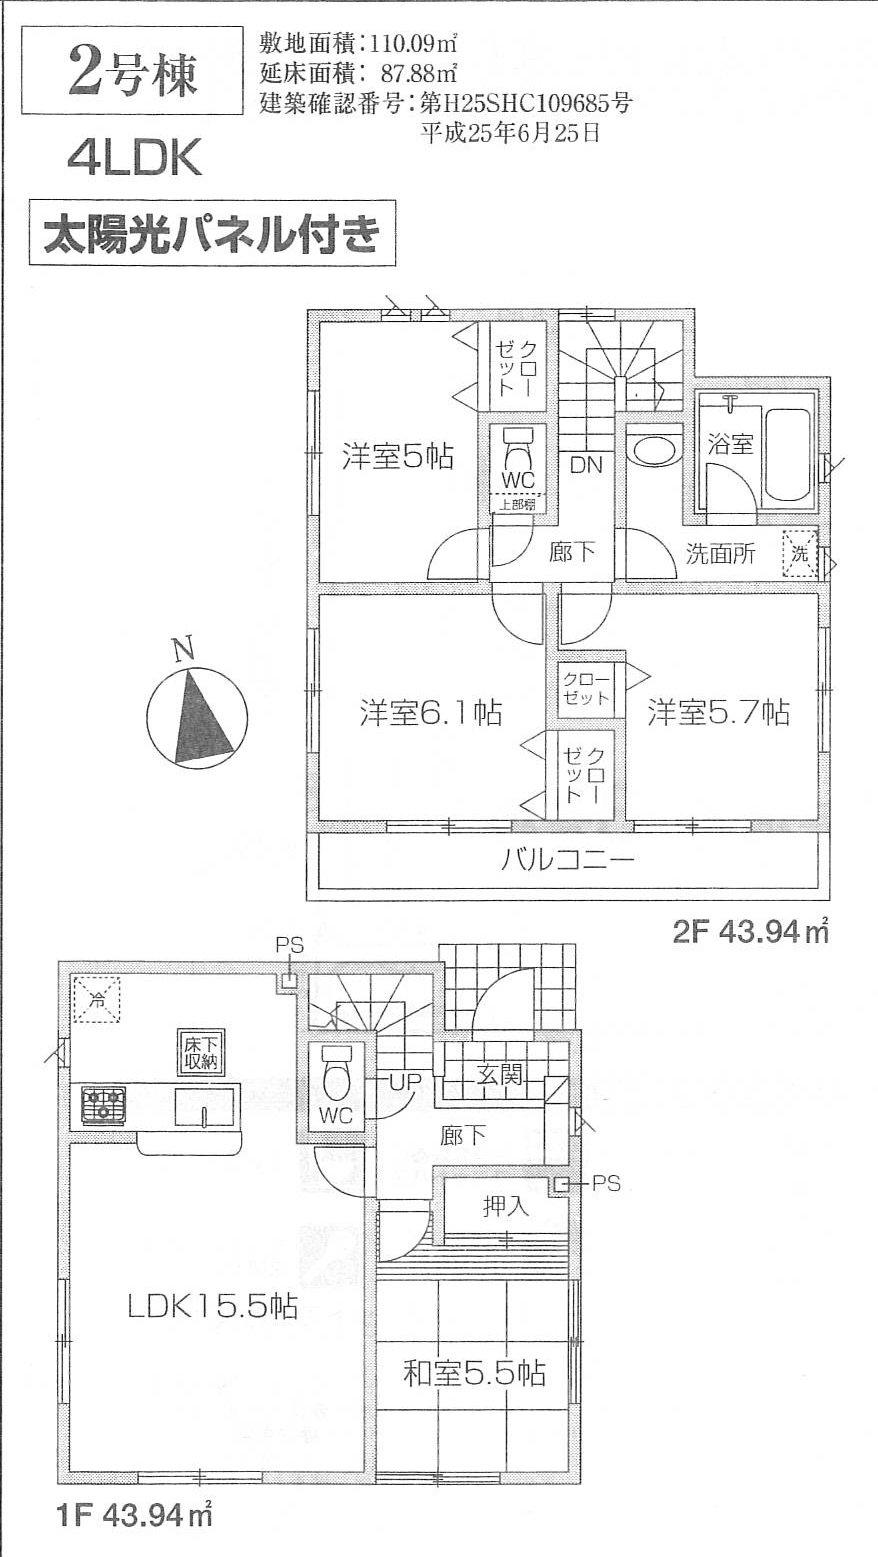 Floor plan. Price 43,800,000 yen, 4LDK, Land area 110.09 sq m , Building area 87.88 sq m